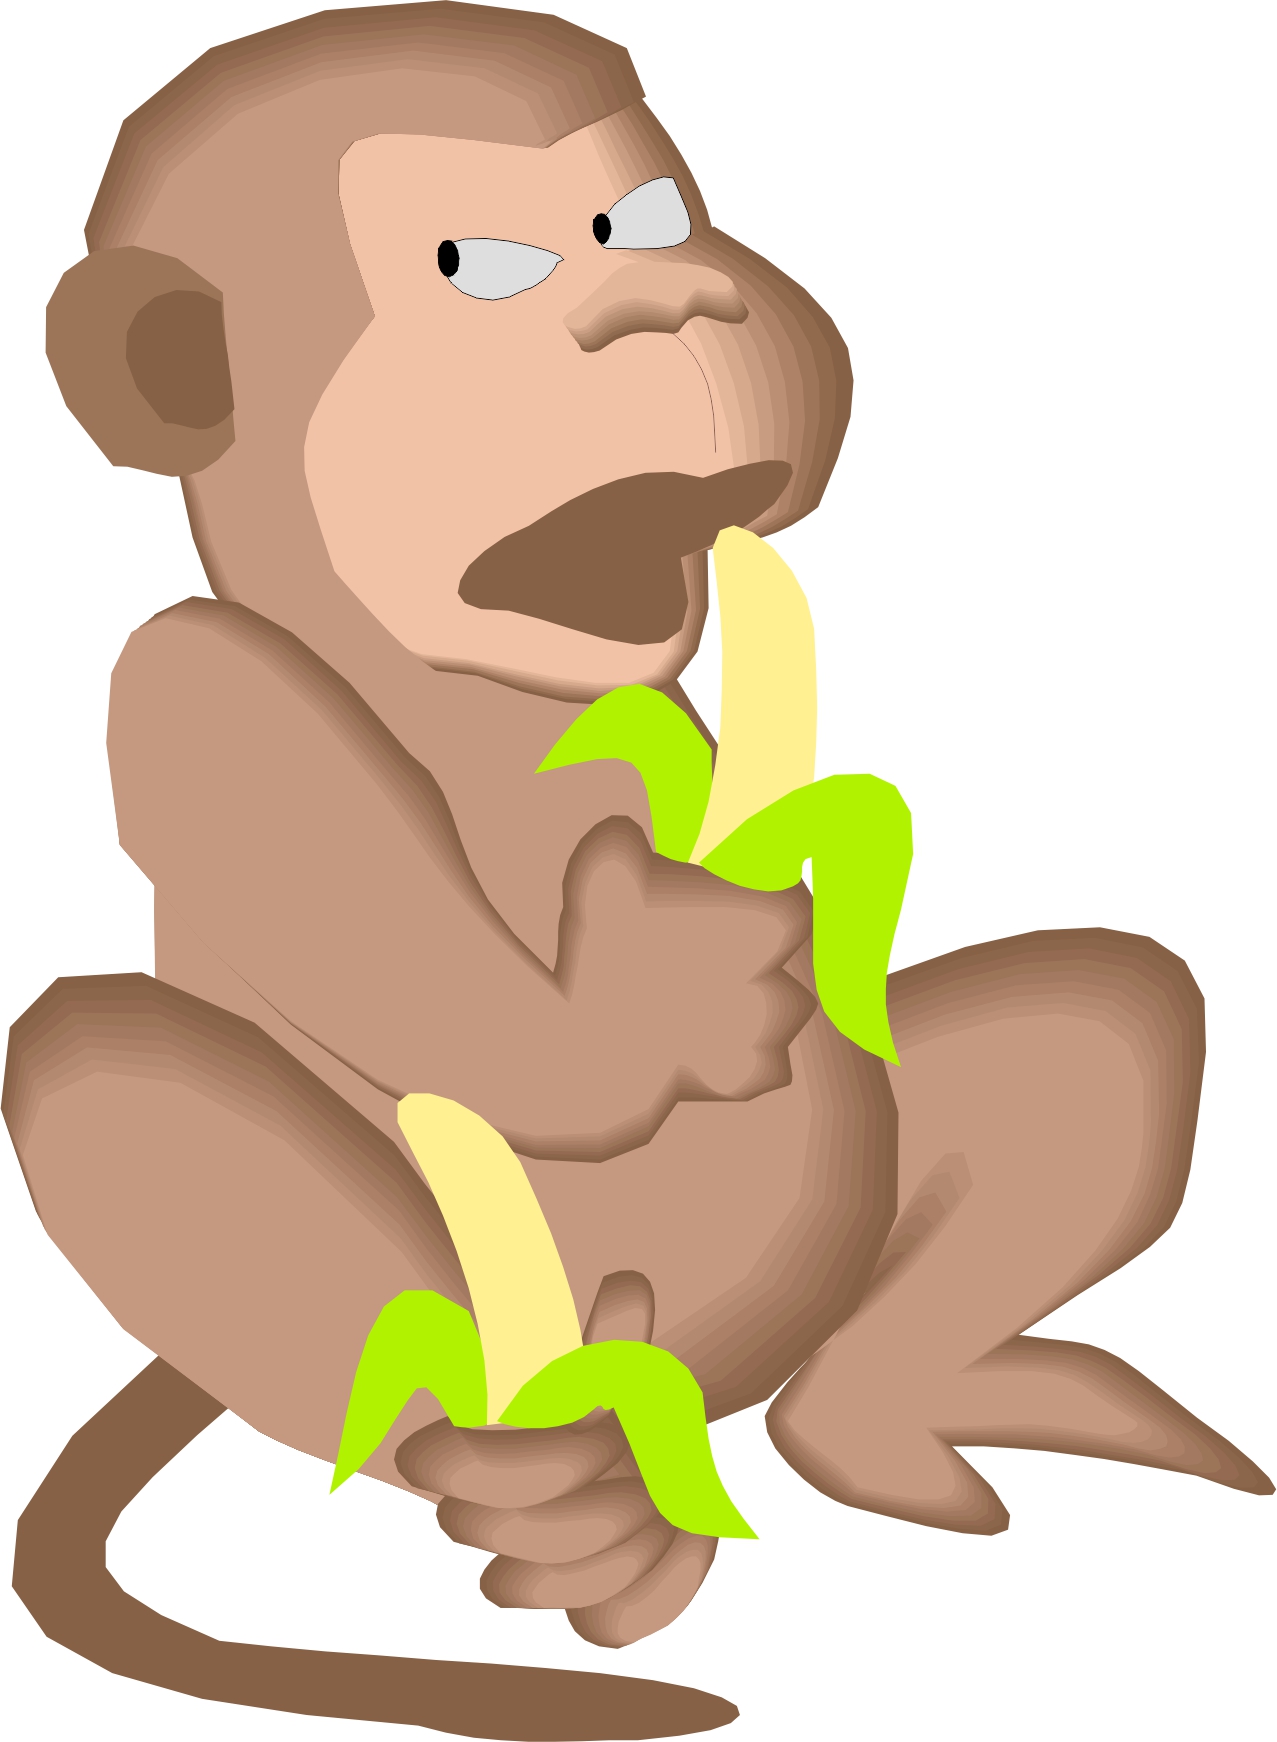 Banana Monkey Cartoon - ClipArt Best